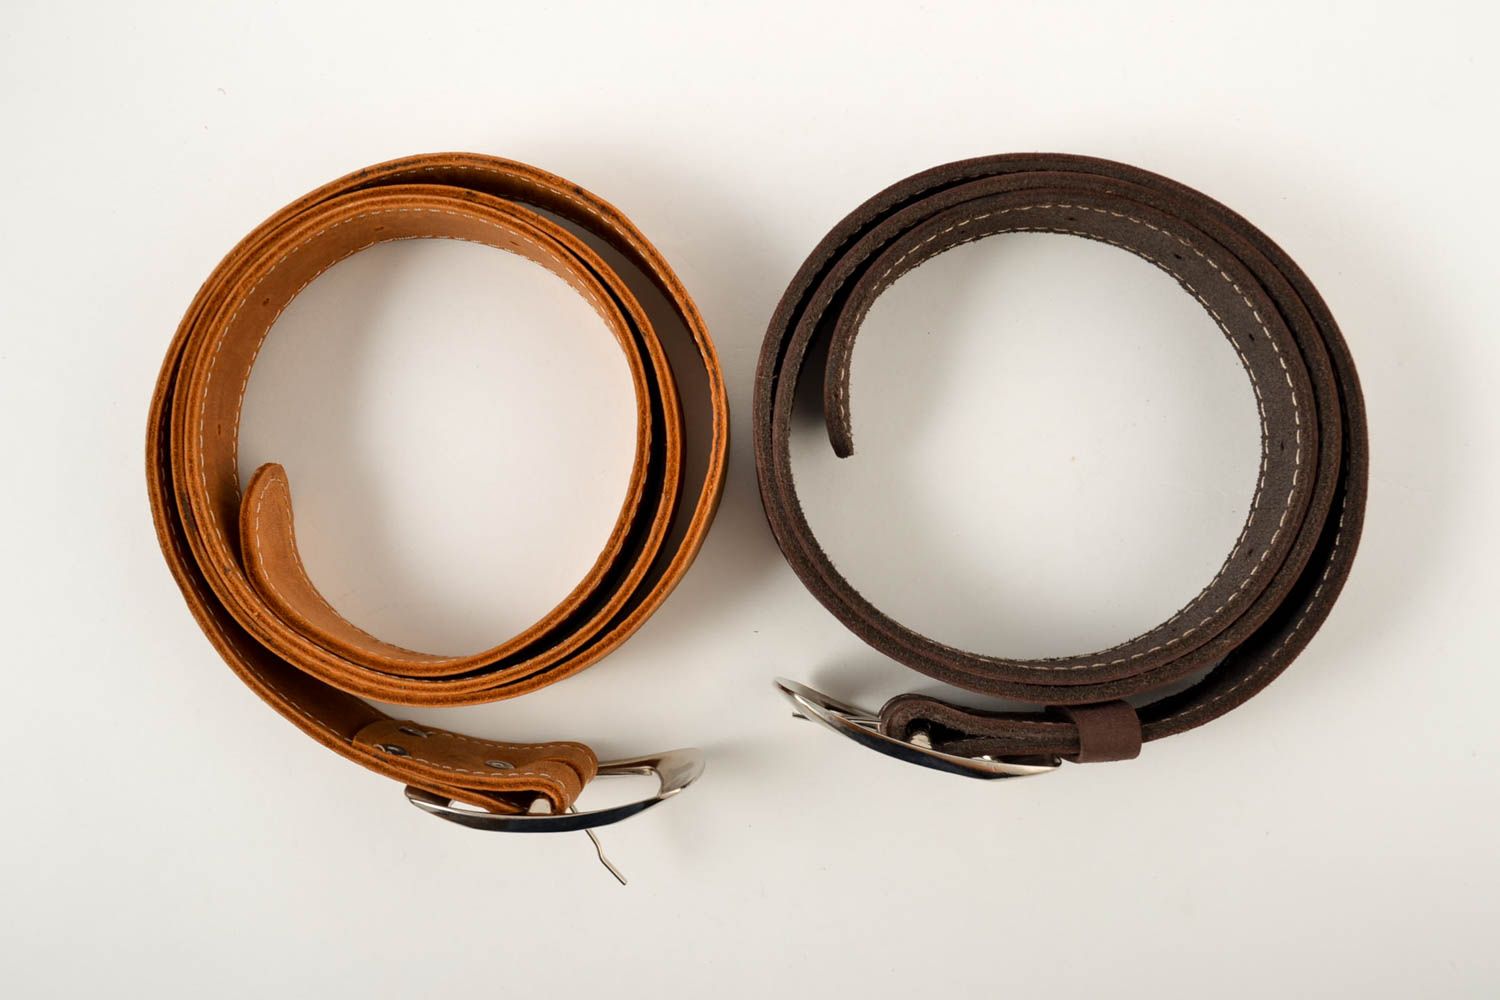 Handmade leather belts 2 designer belts for men leather goods gift for boyfriend photo 2